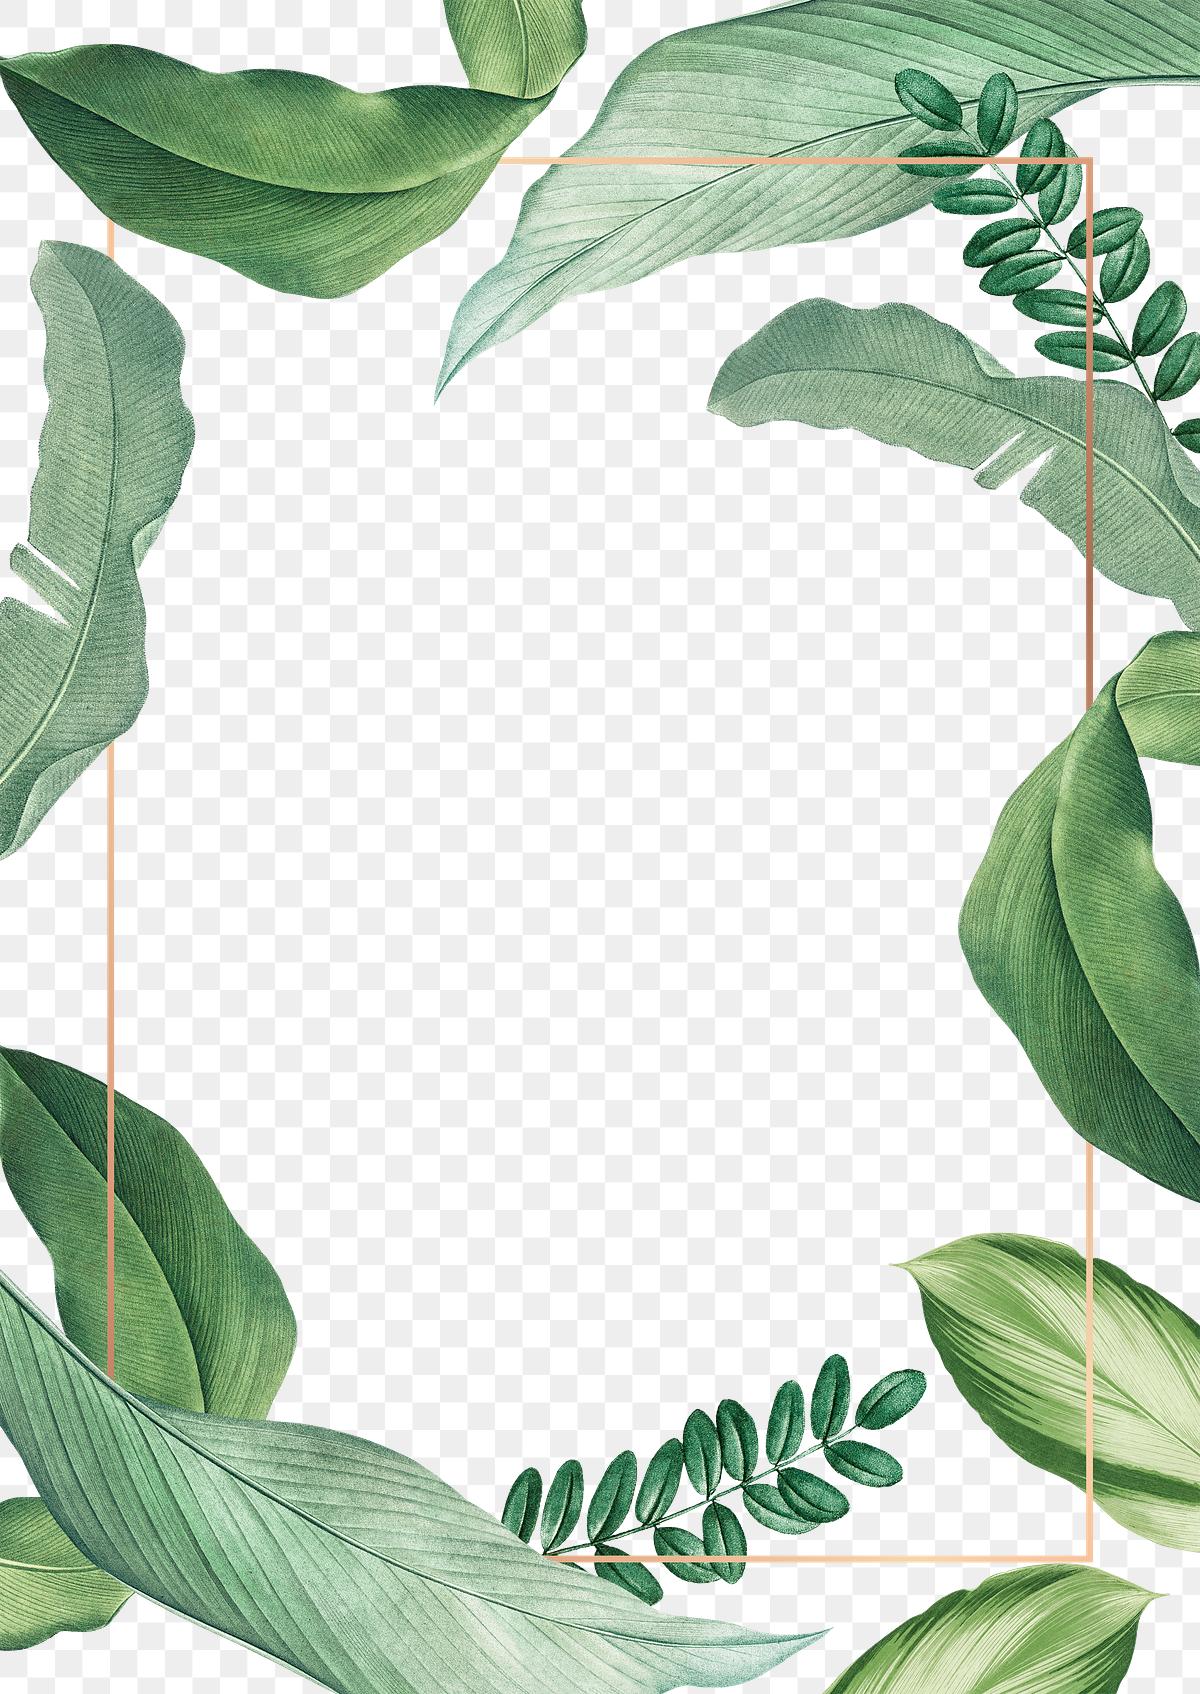 Tropical leaves frame | Free stock illustration - 594540